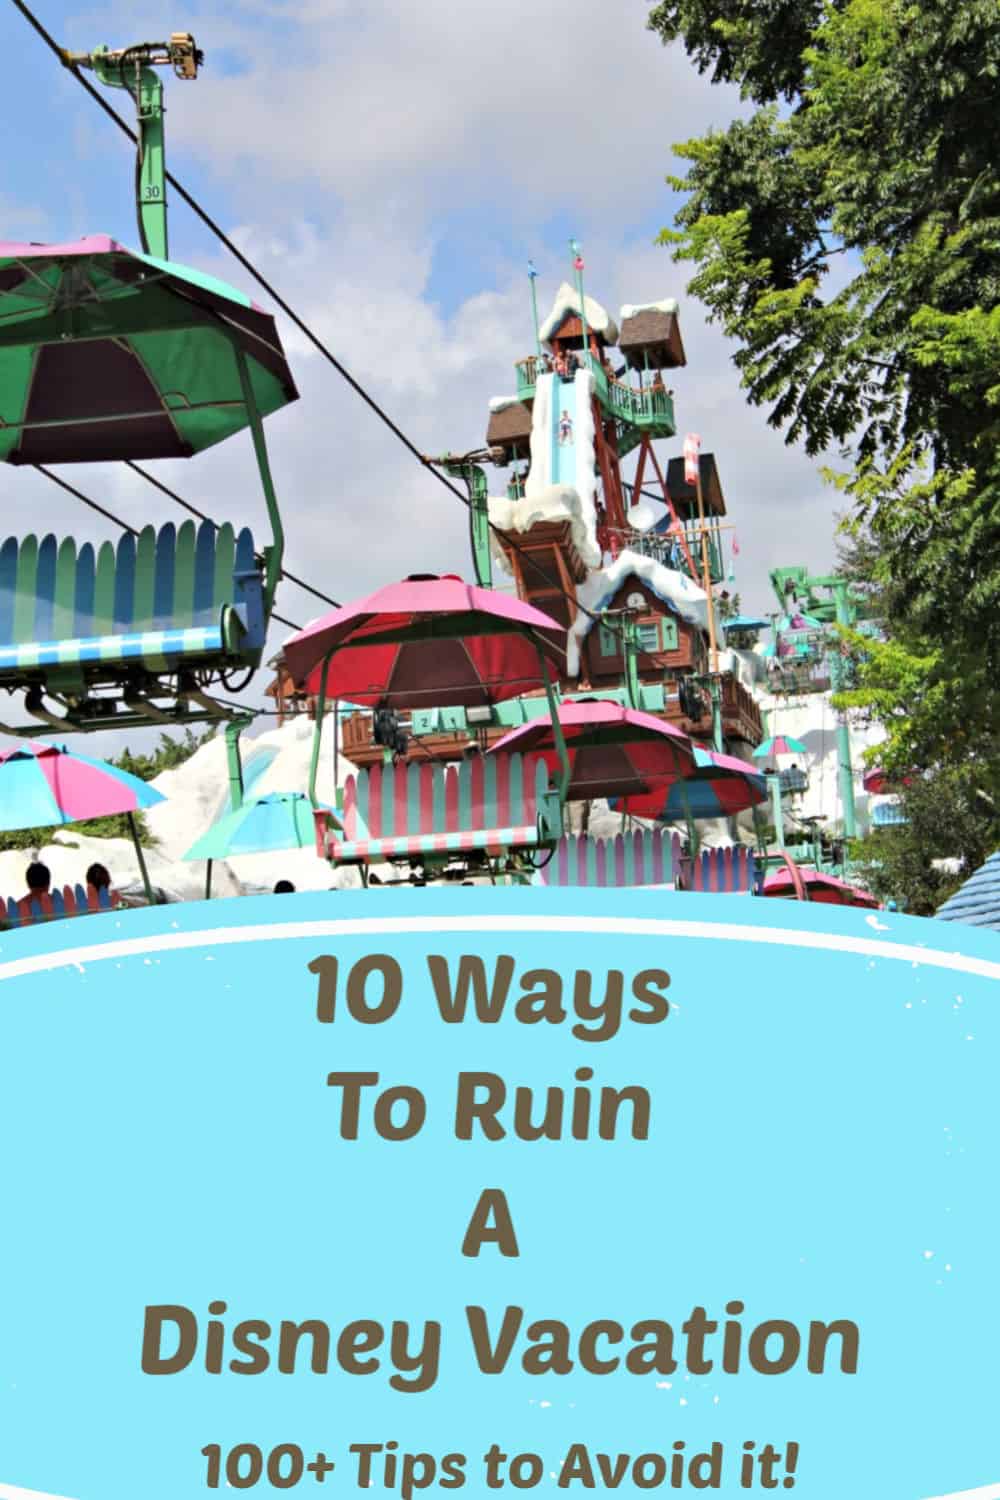 10 Ways to Ruin a Disney Vacation - 100+ Tips to avoid ruining your Disney Vacation